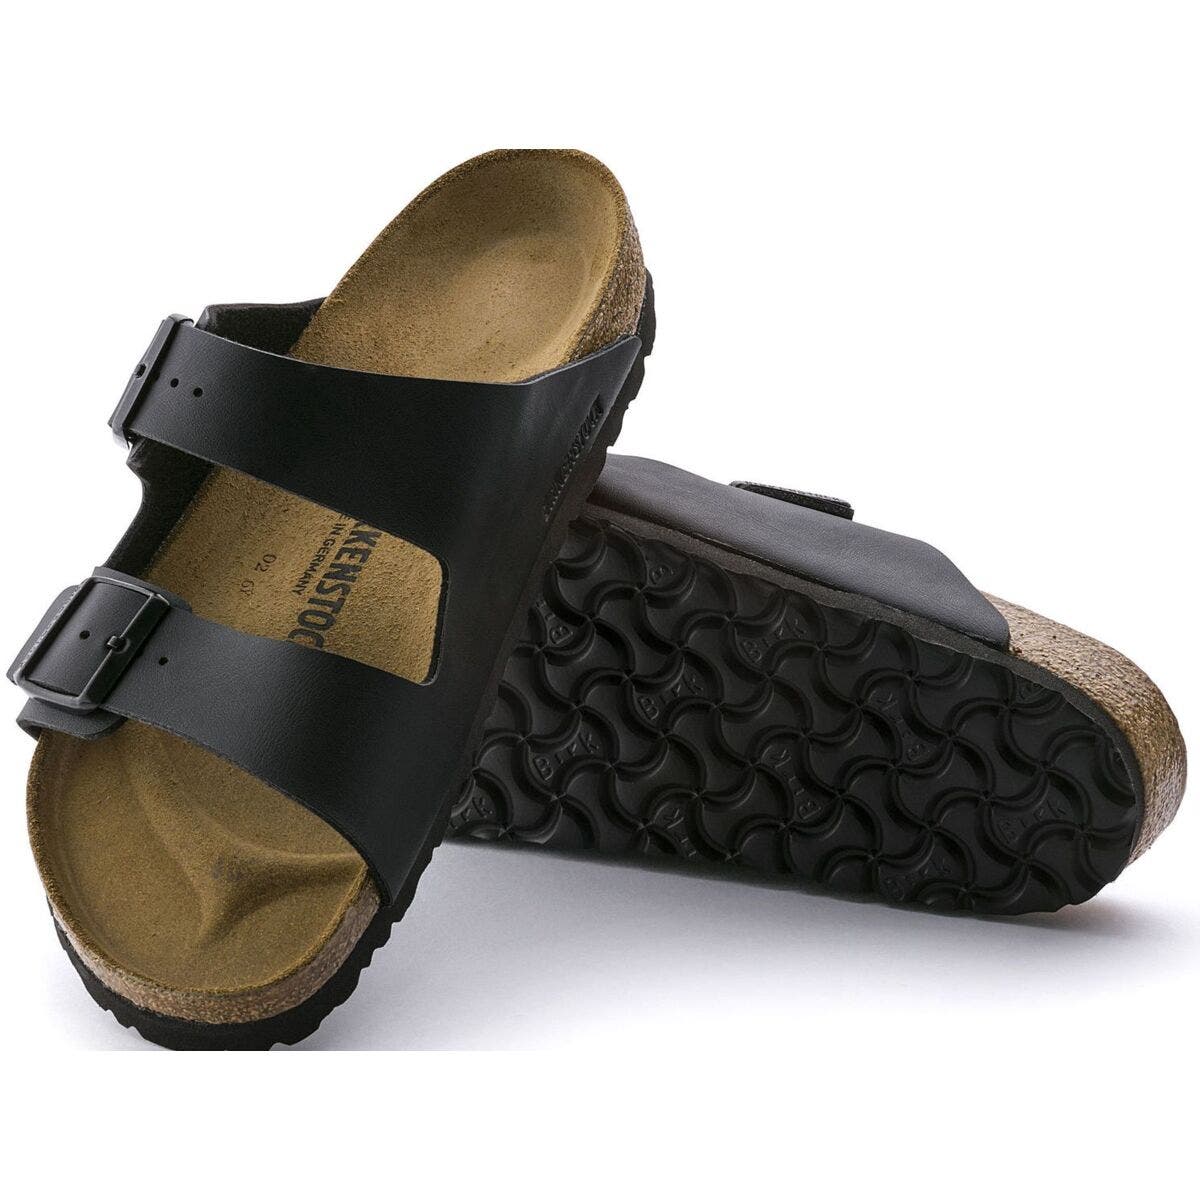 Birkenstock Men's Arizona Birko-Flor Sandals (Black, Size 47 EU)